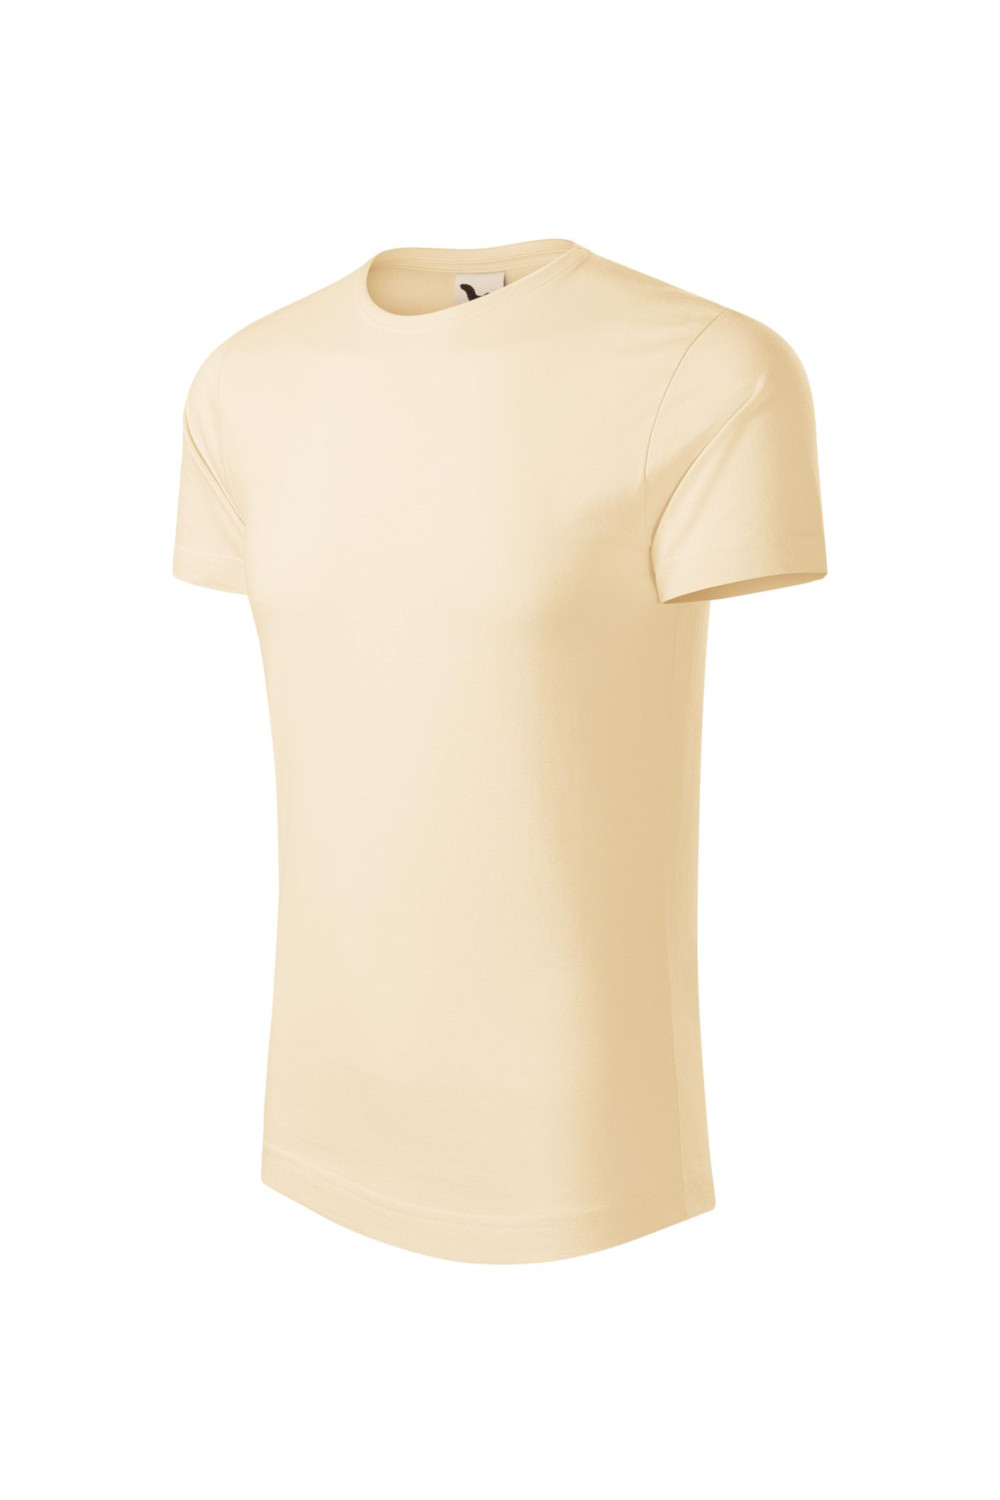 ORIGIN (GOTS) 171 MALFINI ADLER Koszulka męska t-shirt migdałowy